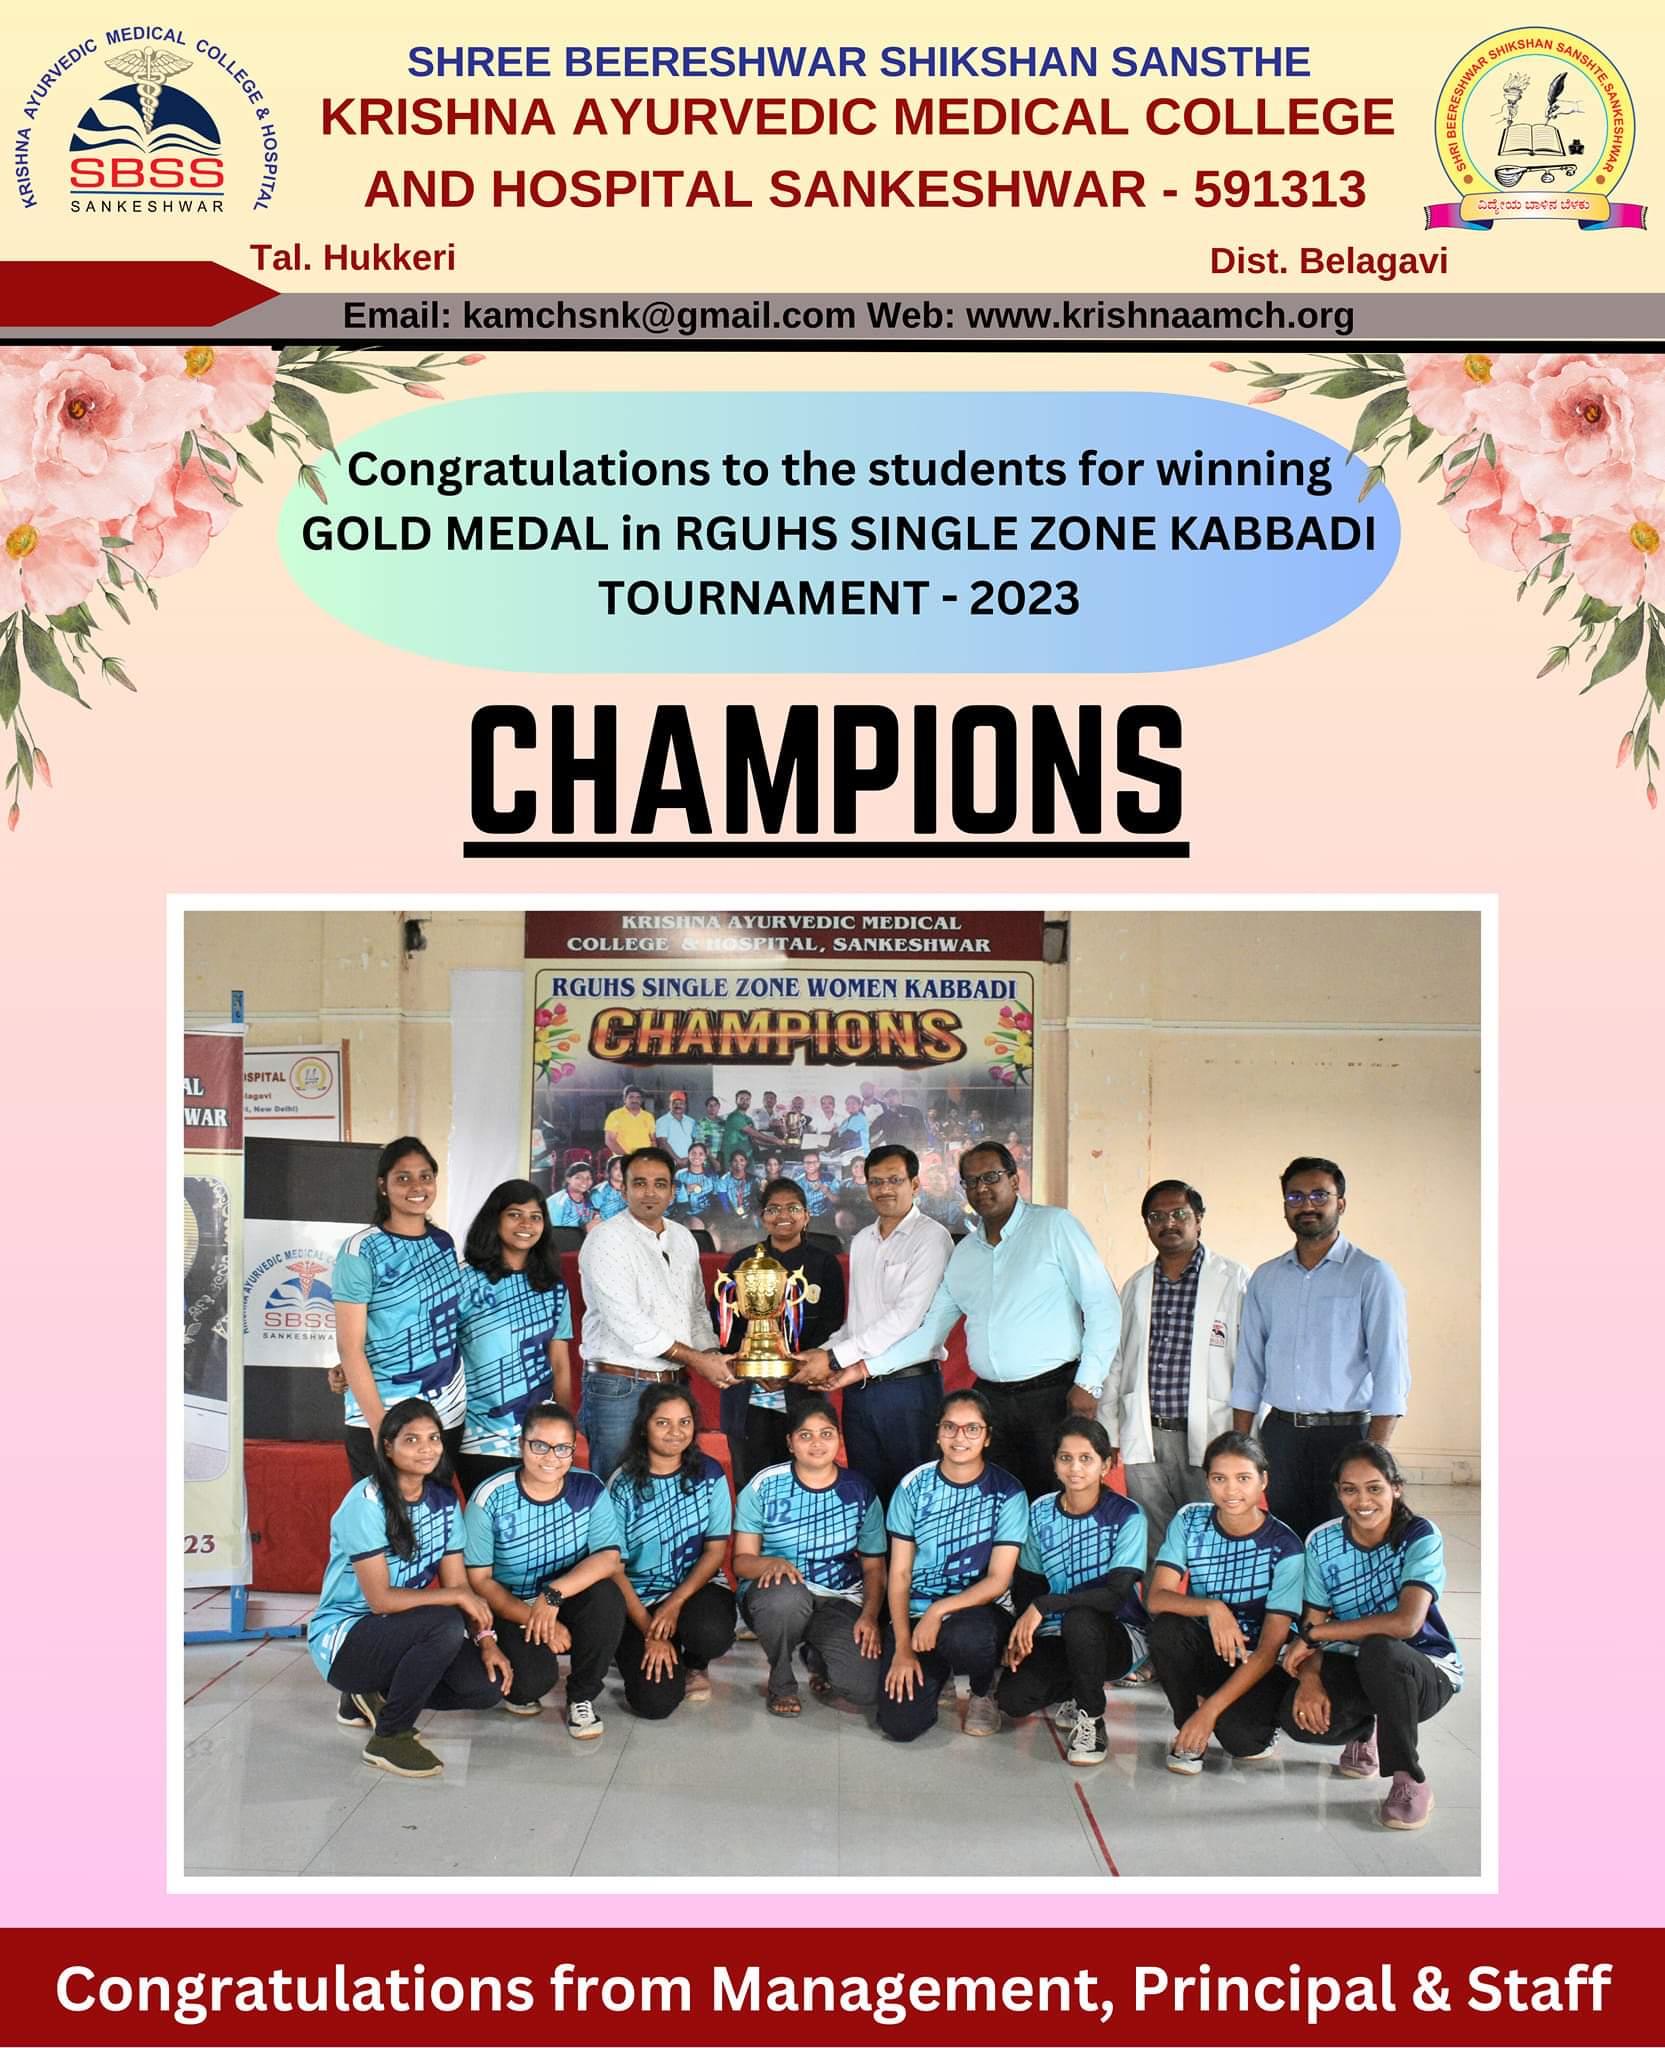 Congratulations to Girls Kabaddi team for winning GOLD MEDAL in RGUHS Single Zone Kabaddi Tournament.